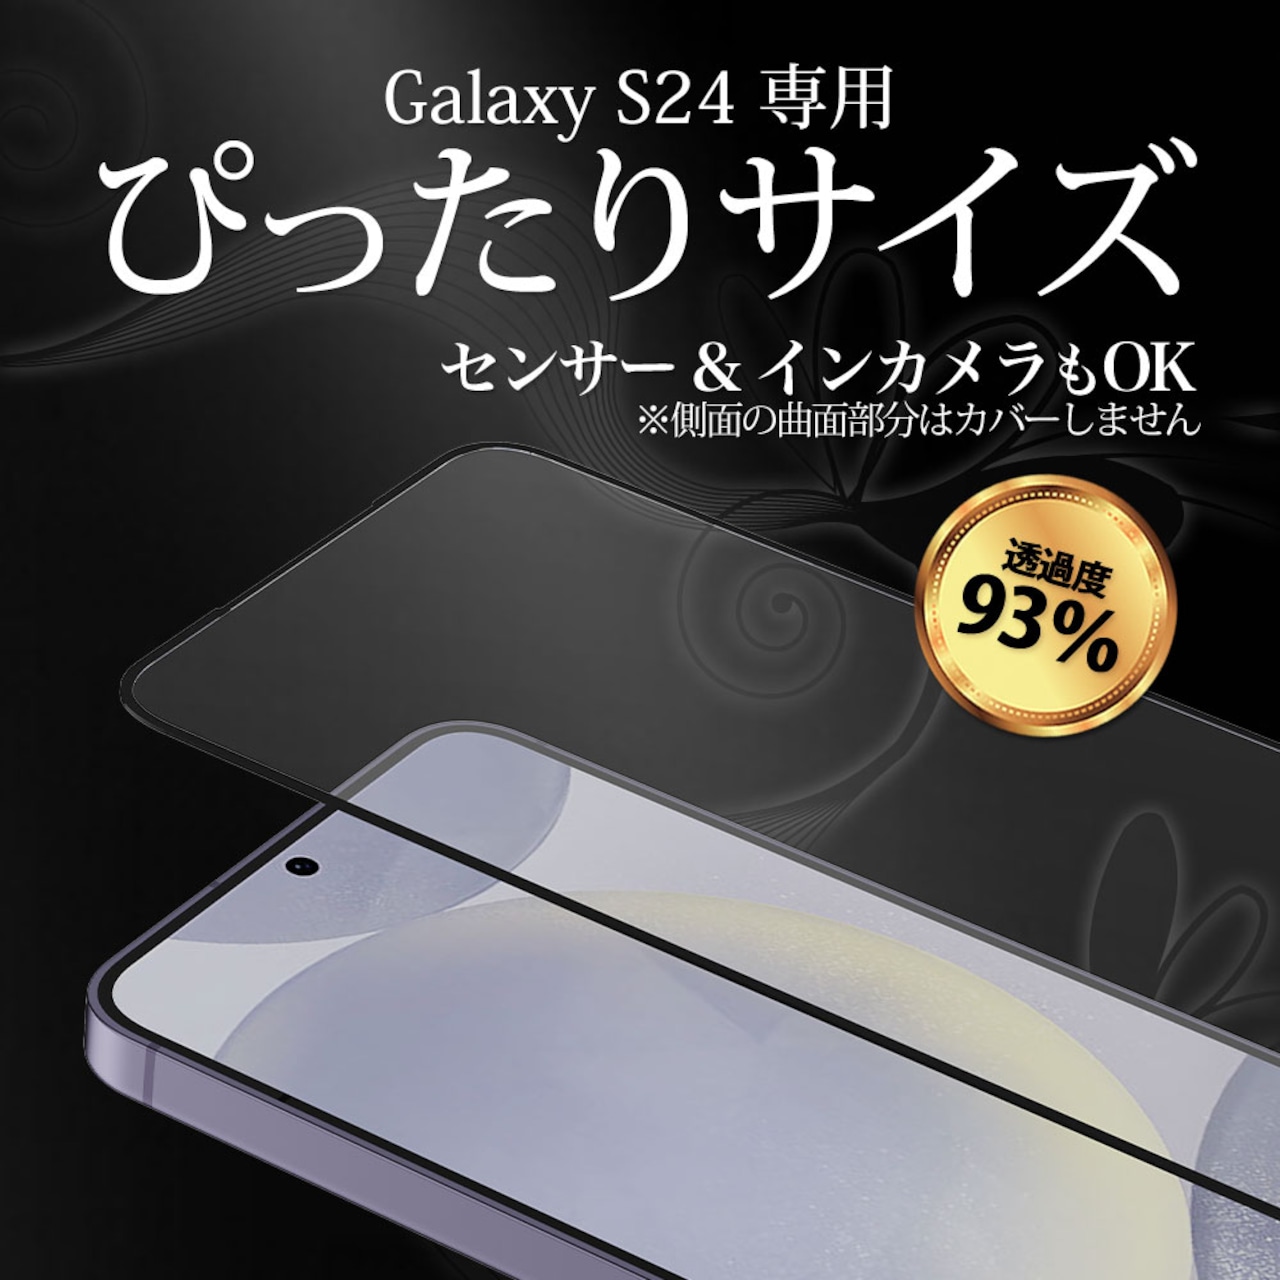 Hy+ Galaxy S24 フィルム ガラスフィルム W硬化製法 一般ガラスの3倍強度 全面保護 全面吸着 日本産ガラス使用 厚み0.33mm ブラック